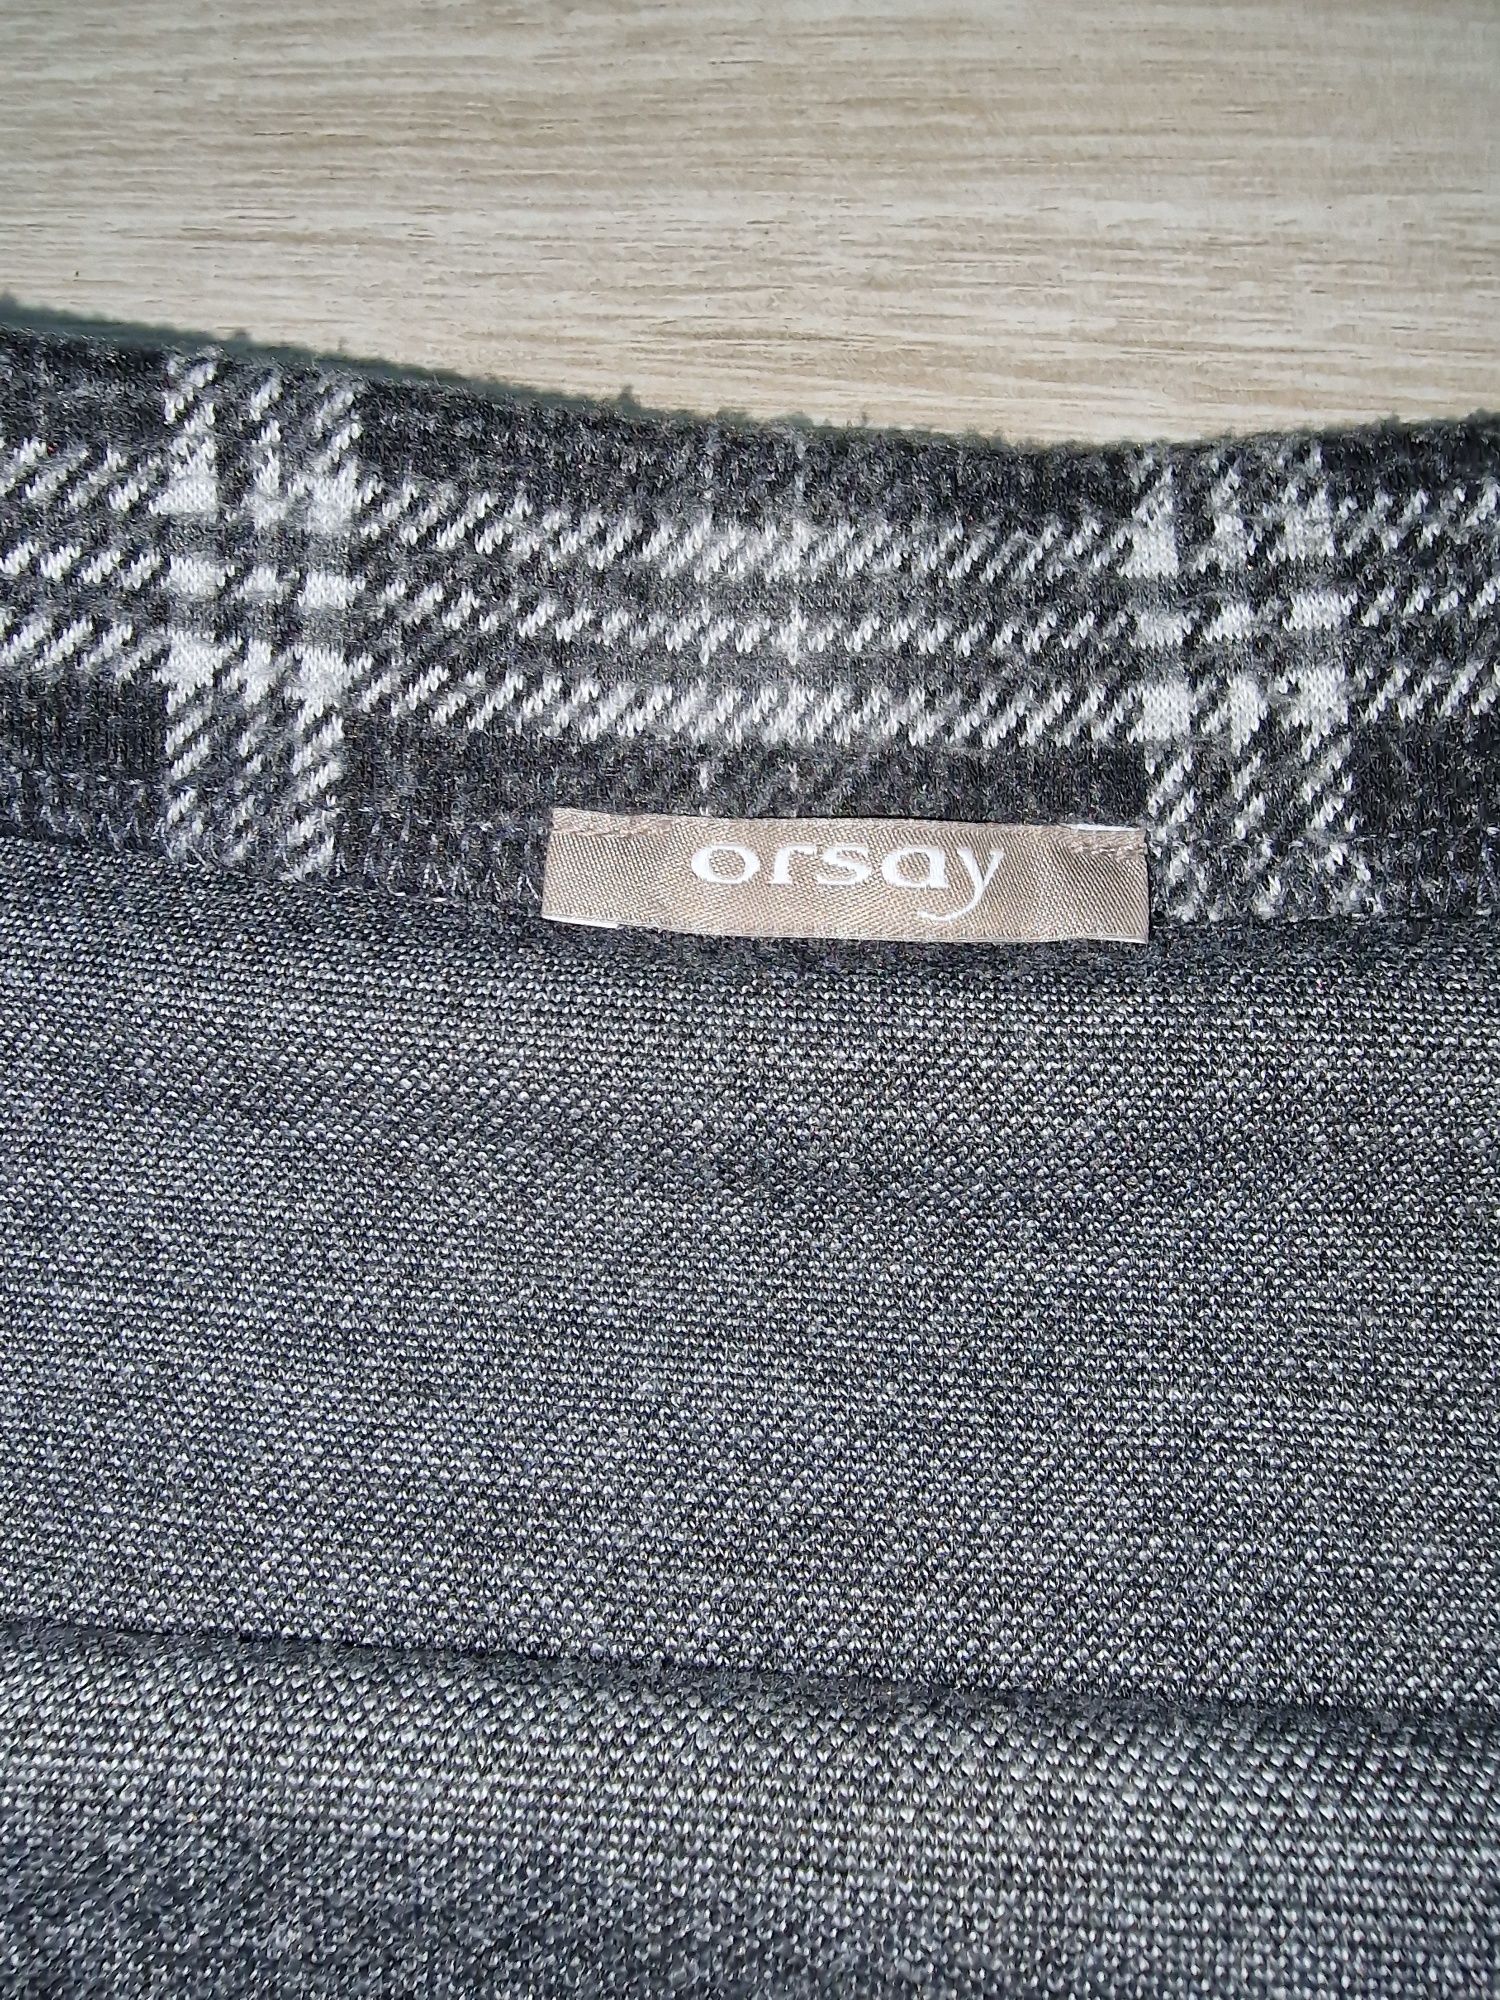 Orsay spódnica spódniczka krata